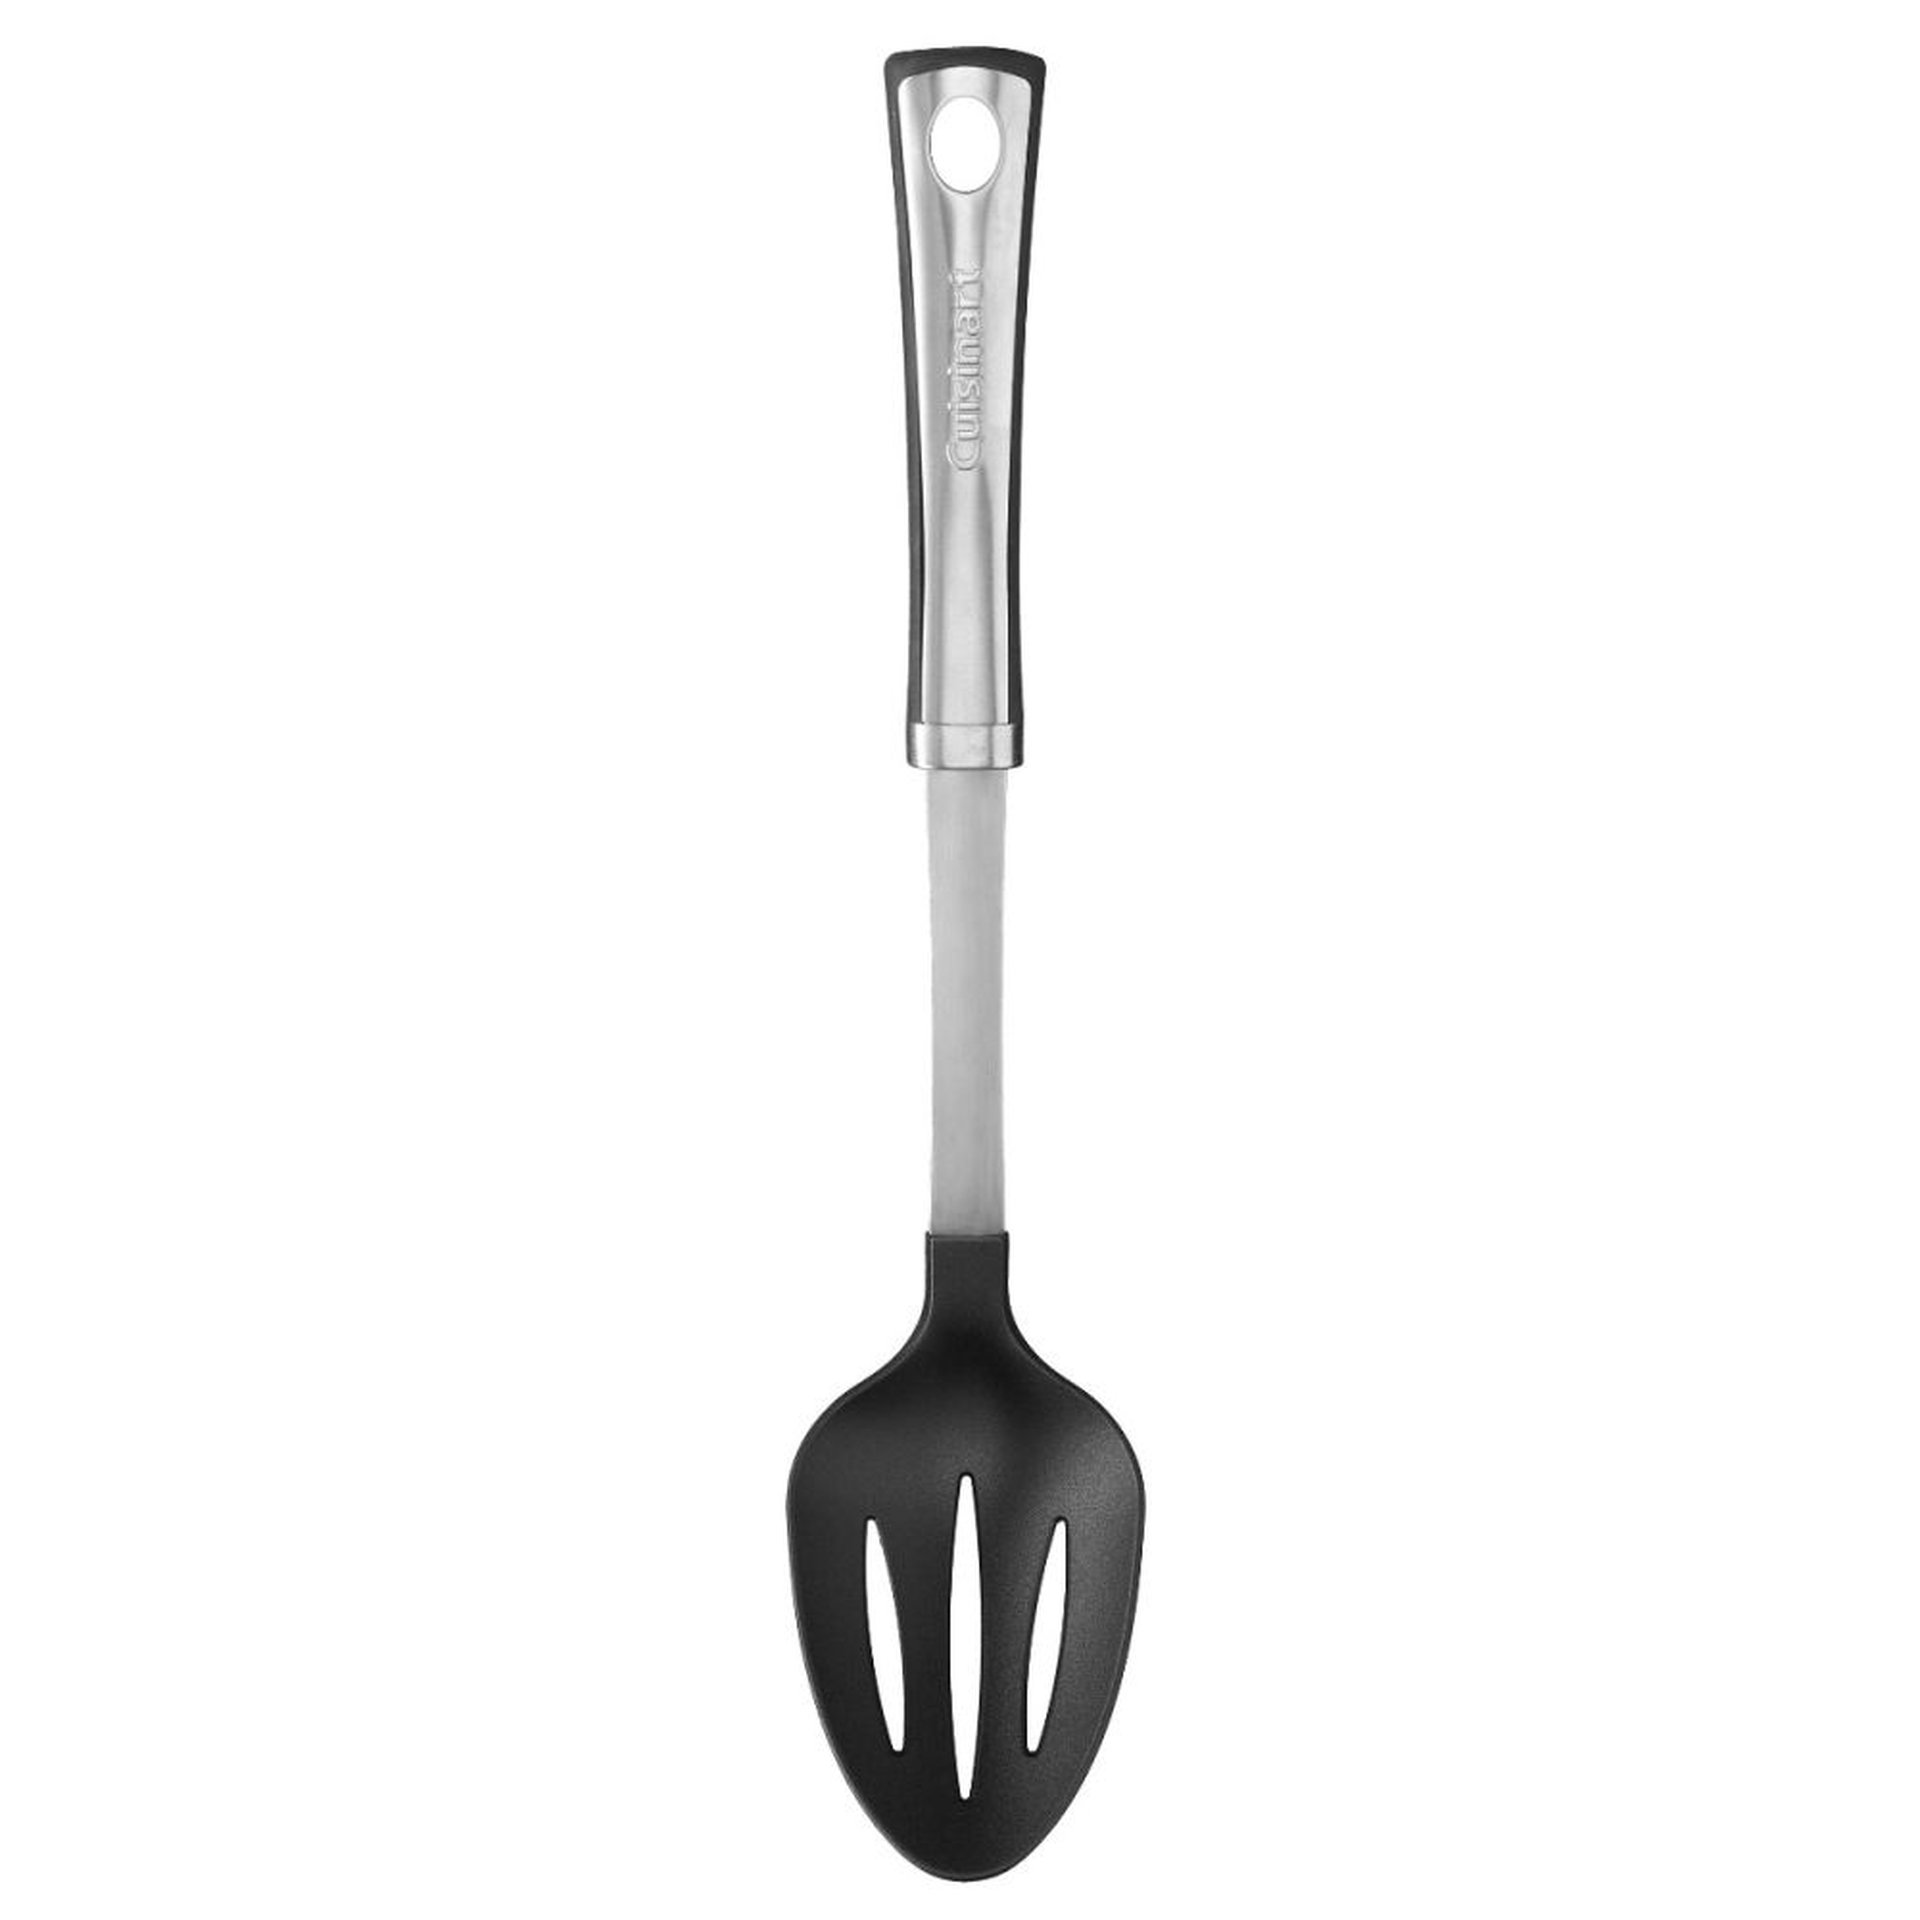 https://cdn.everythingkitchens.com/media/catalog/product/cache/1e92cb92f6cdc27d285ff0da8b2b8583/c/h/chefs-classic-slotted-spoon.jpg